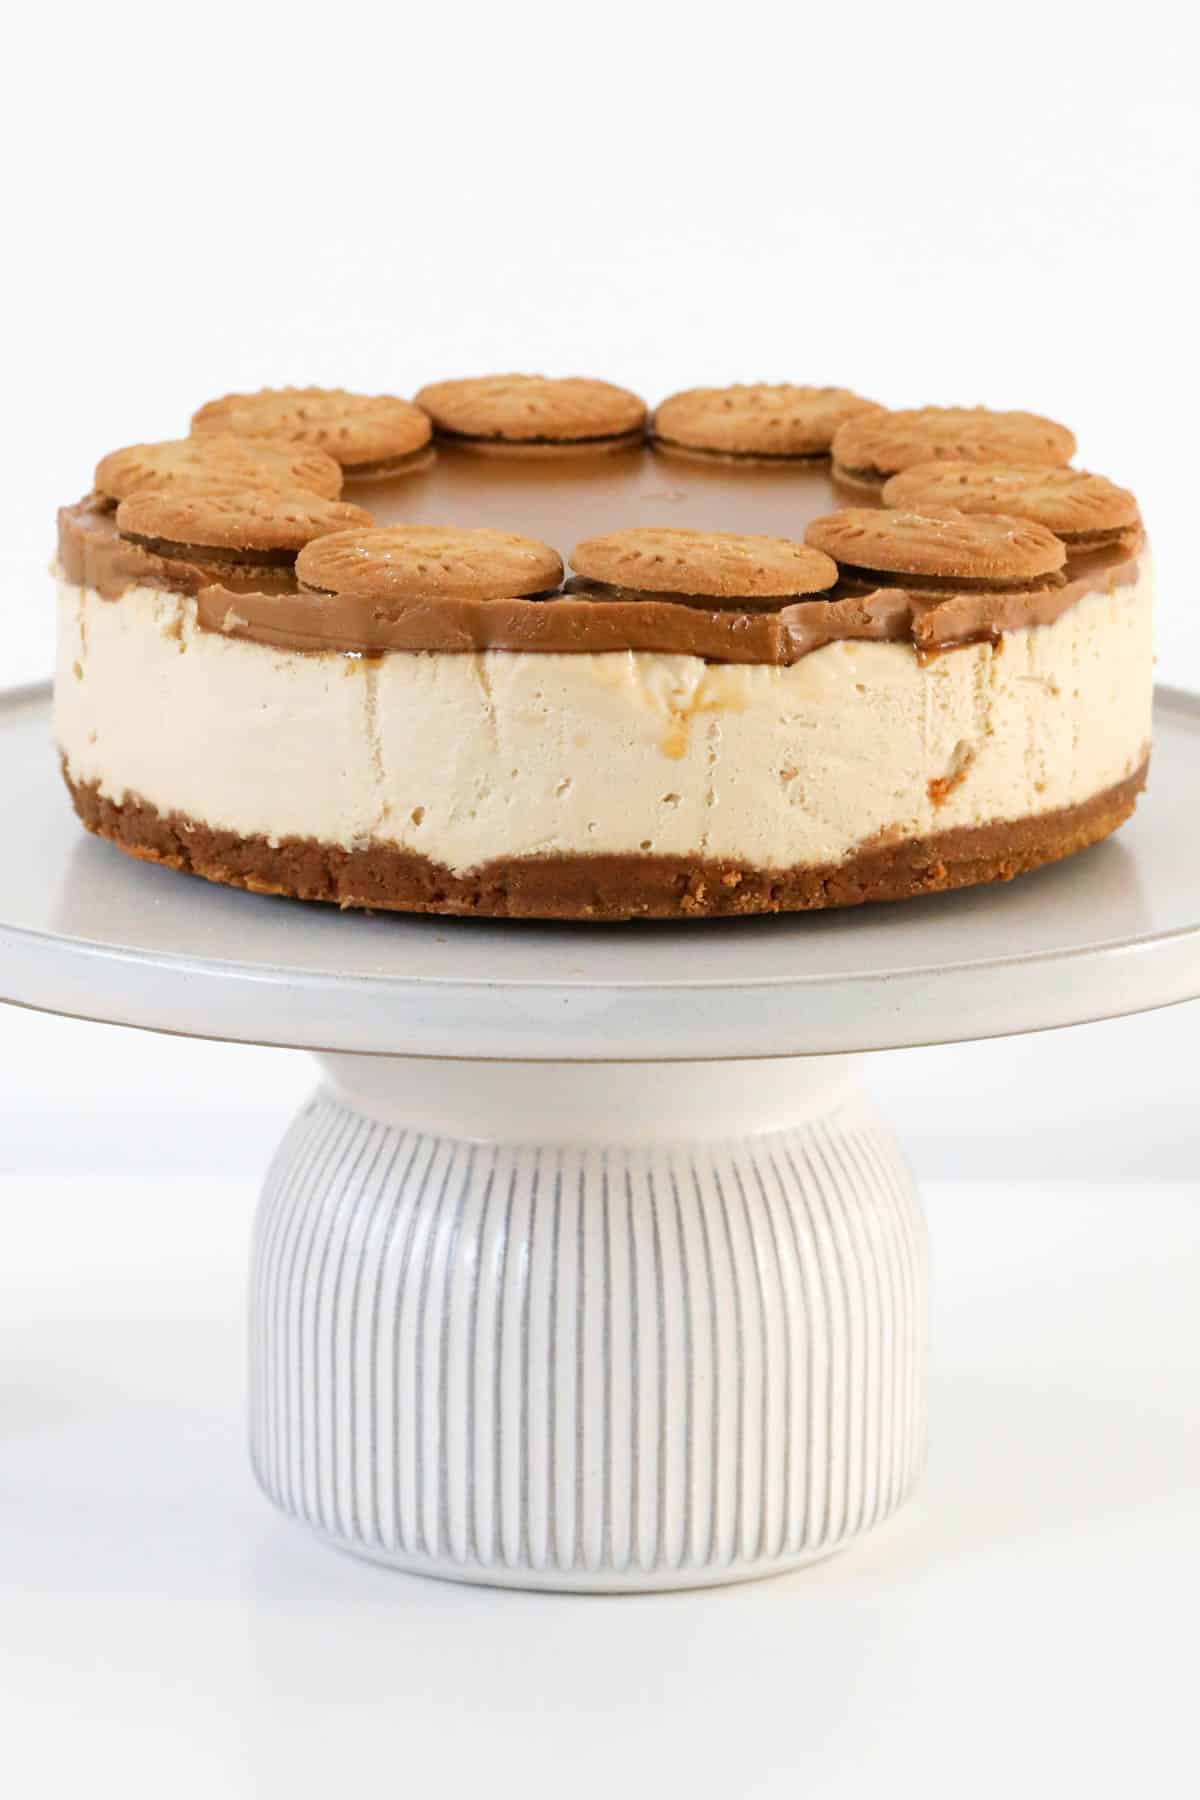 A no-bake Biscoff cheesecake dessert on a cake stand.